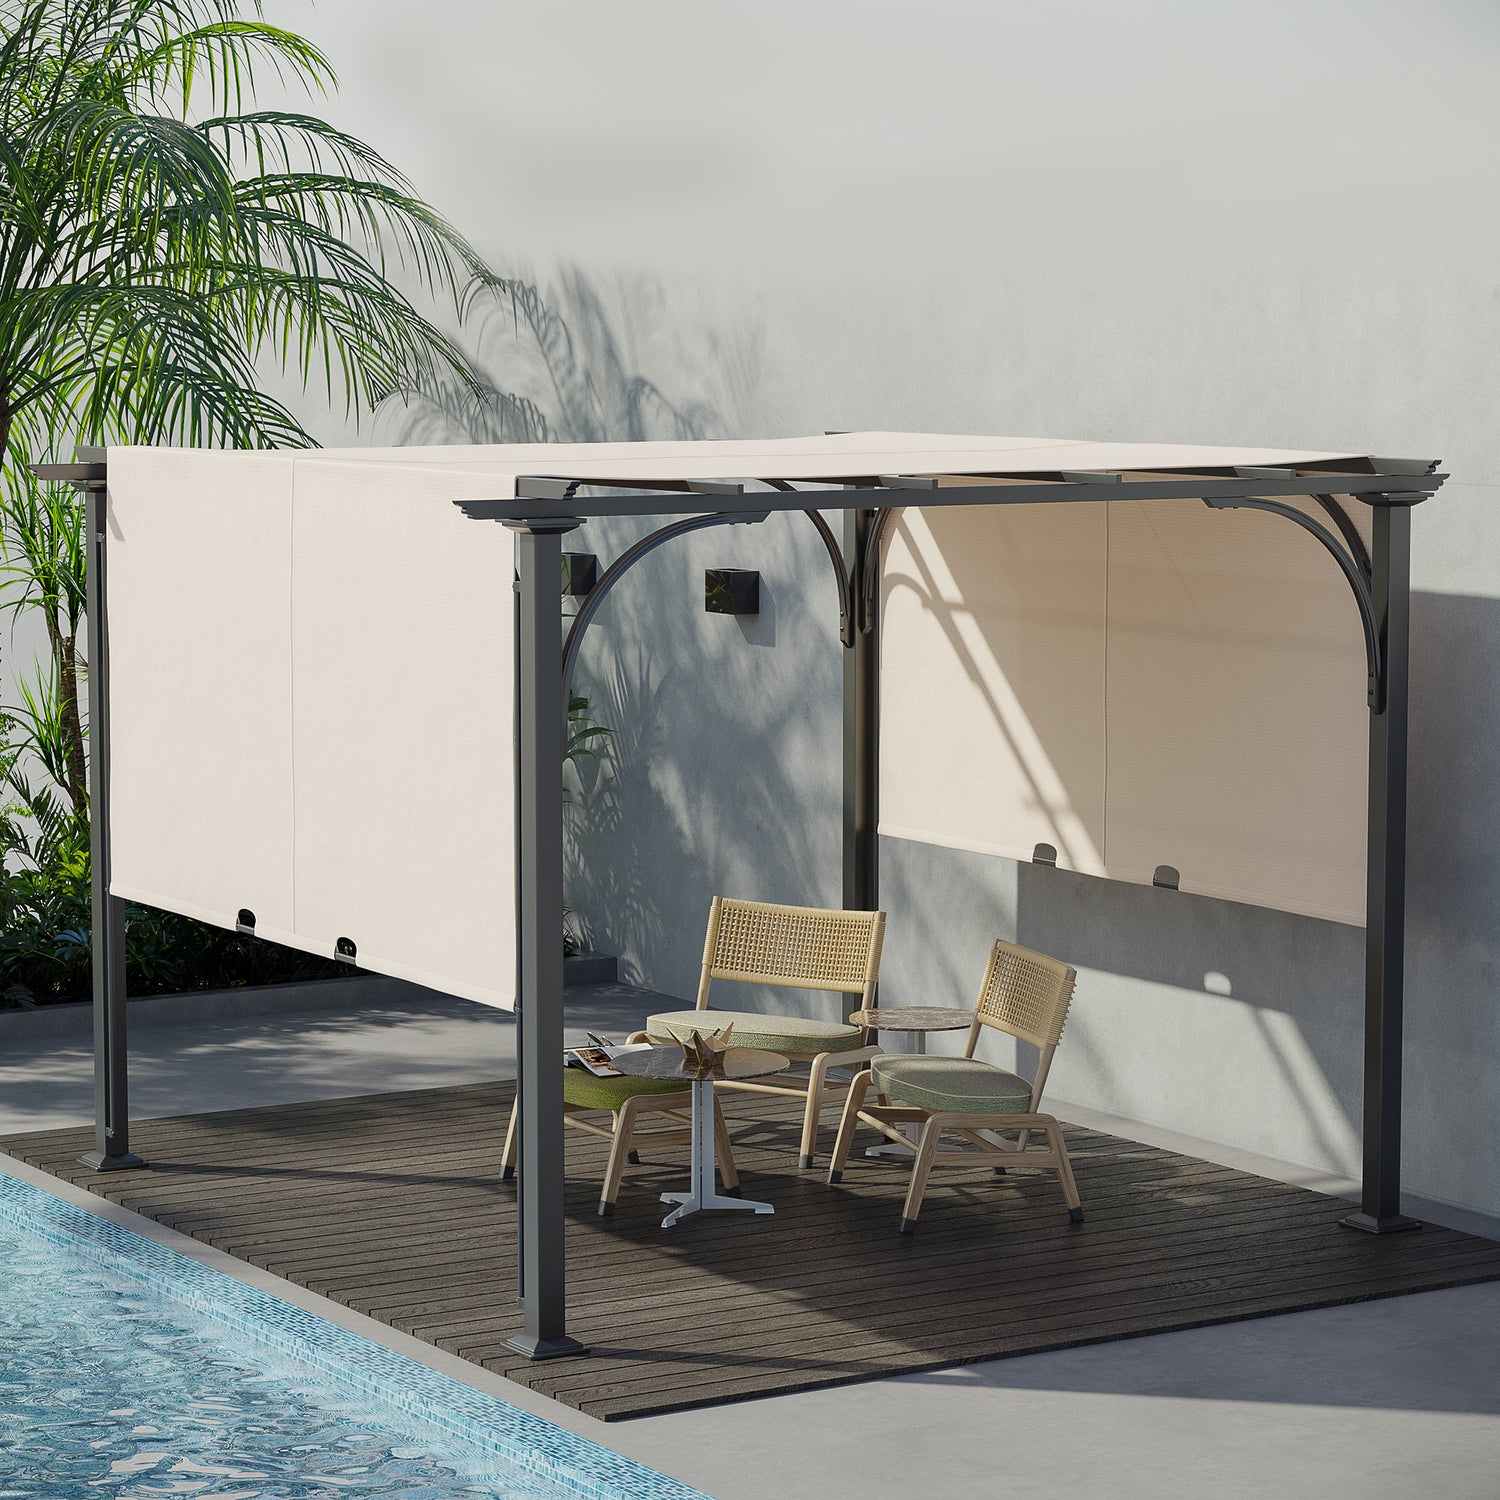 3 x 3(m) Outdoor Retractable Pergola, Garden Pergola Gazebo with Adjustable Canopy, Beige - Gazebo Store